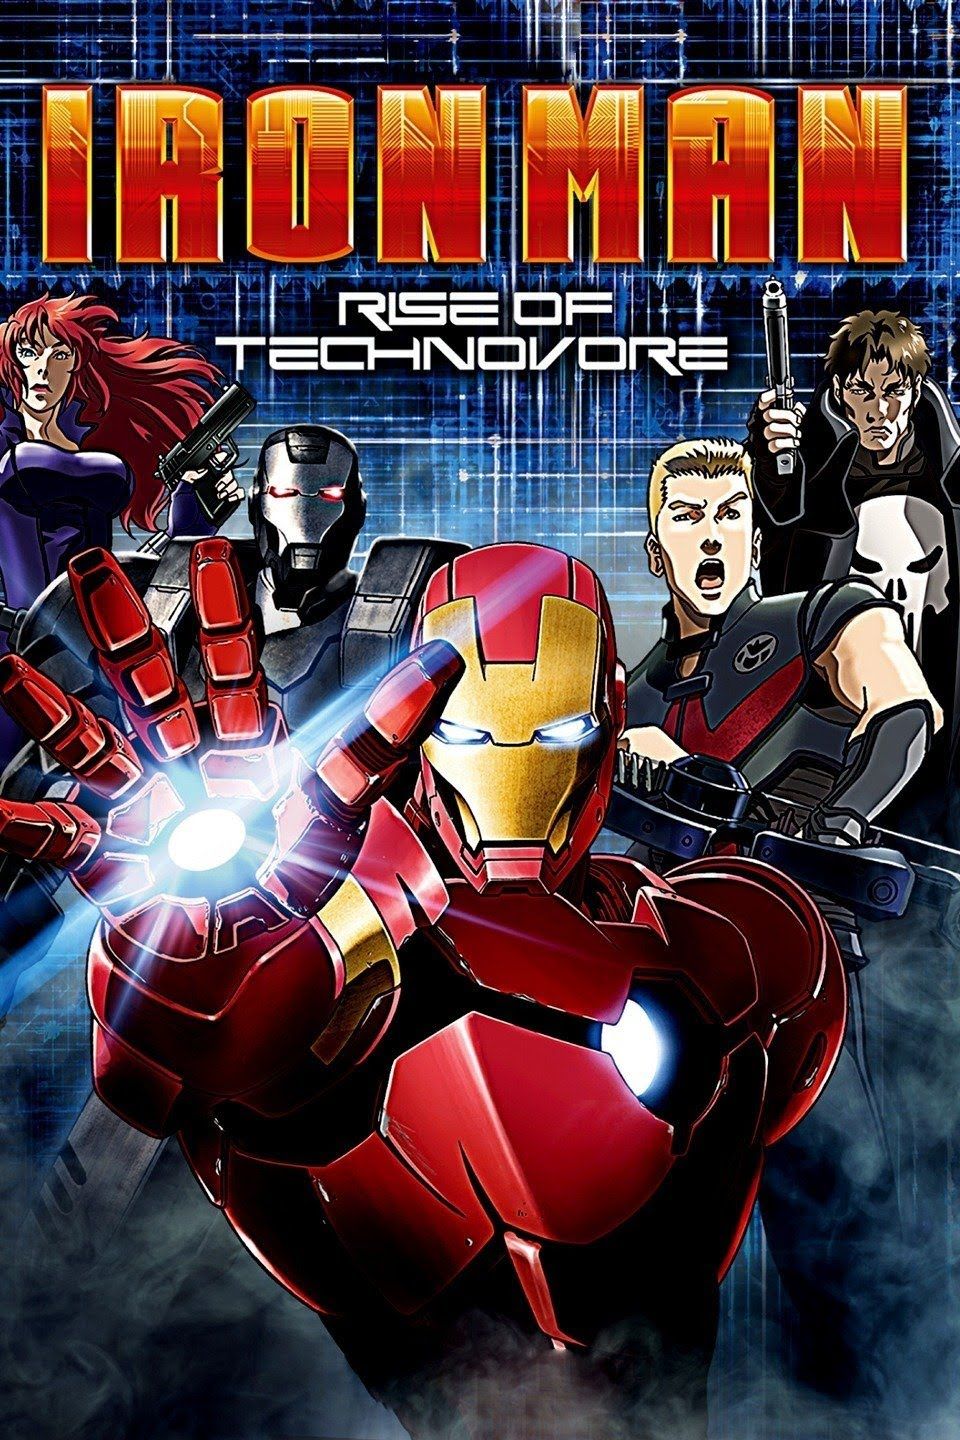 Iron Man Rise of Technovore (2013) Hindi Dubbed ORG BluRay Full Movie 720p 480p